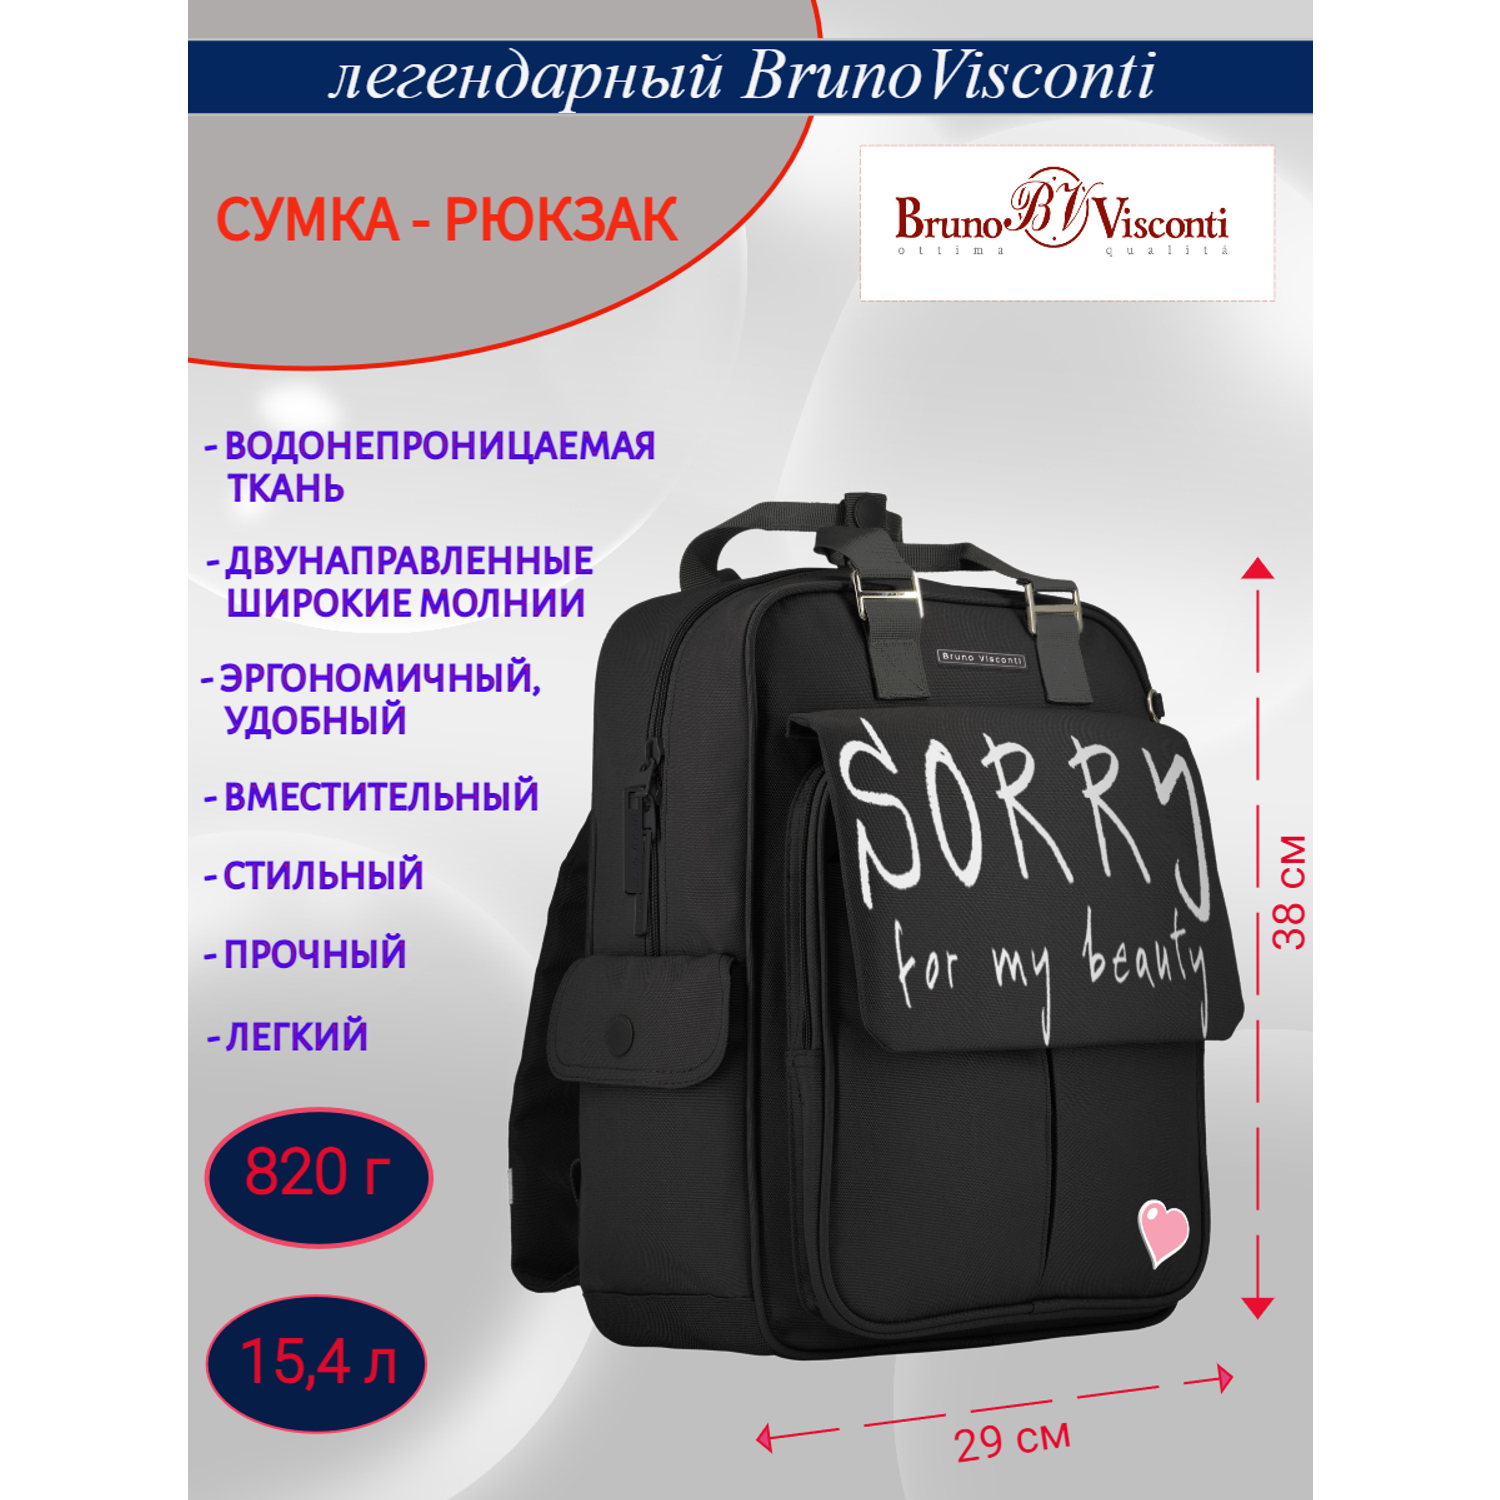 Сумка-рюкзак Bruno Visconti черный sorry - фото 1